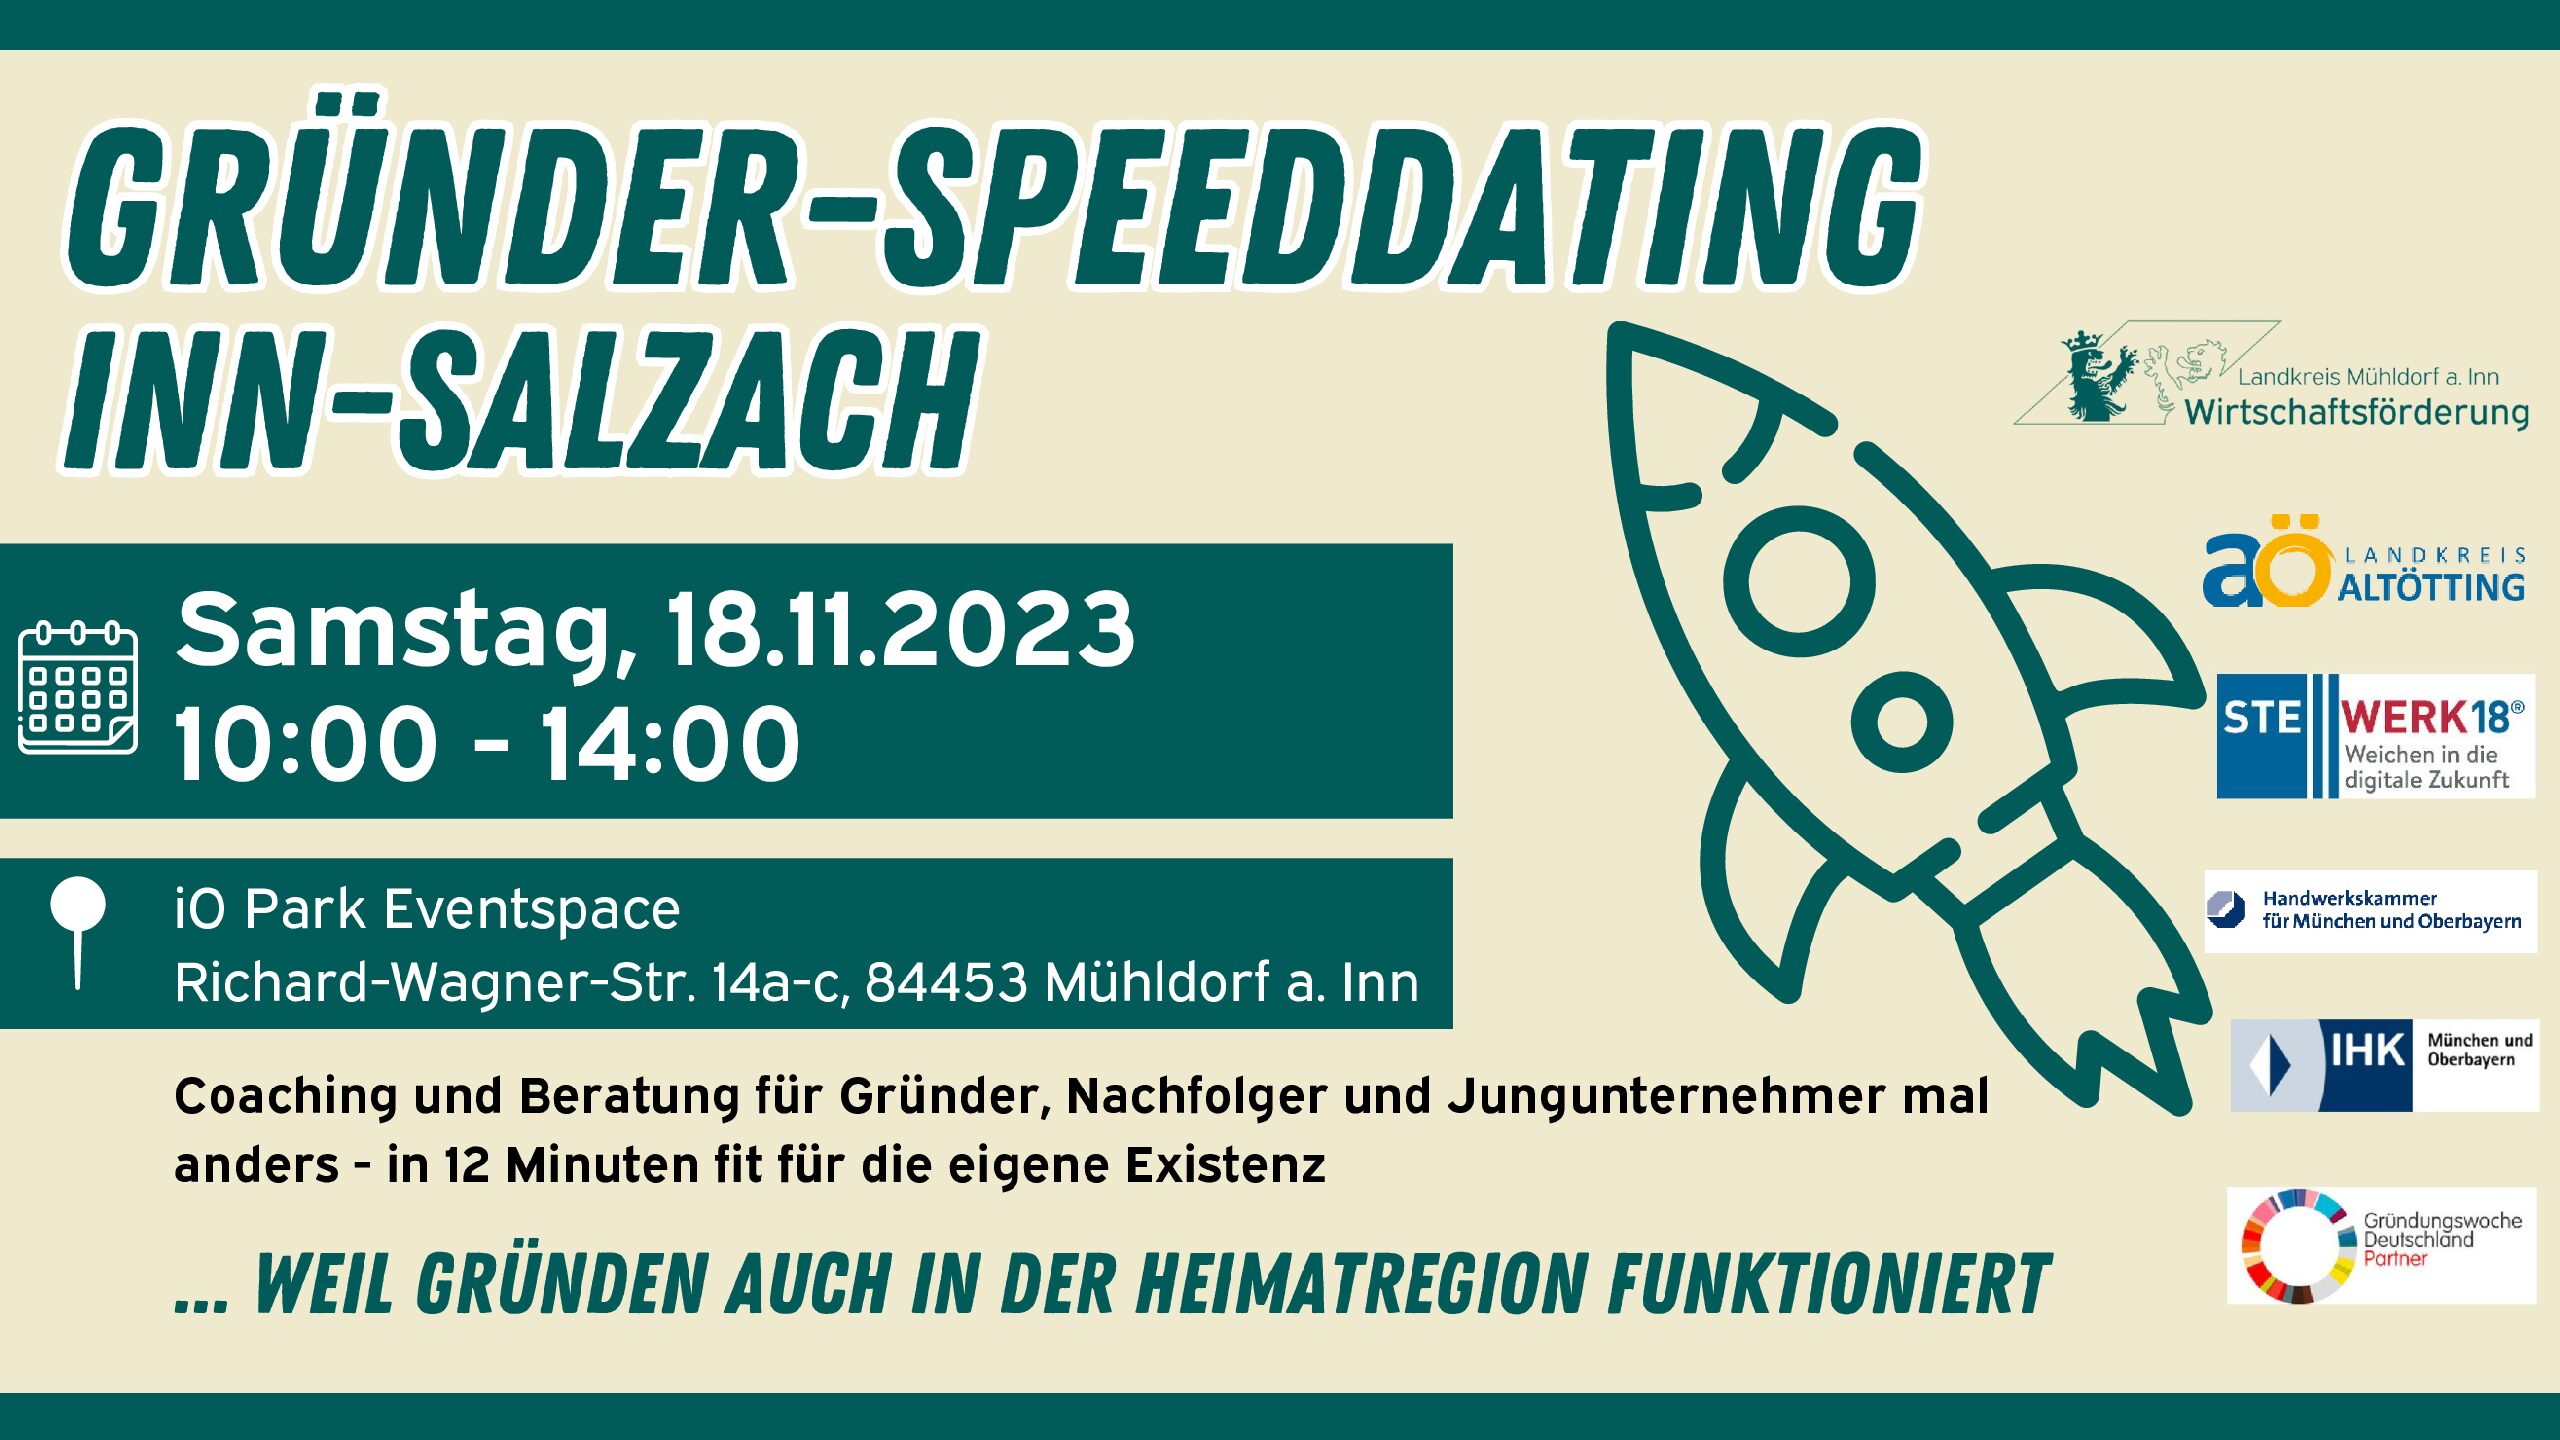 VA Bild Gruenderspeeddating Innsalzach 20231118 pdf - Gründer-Speeddating Inn-Salzach